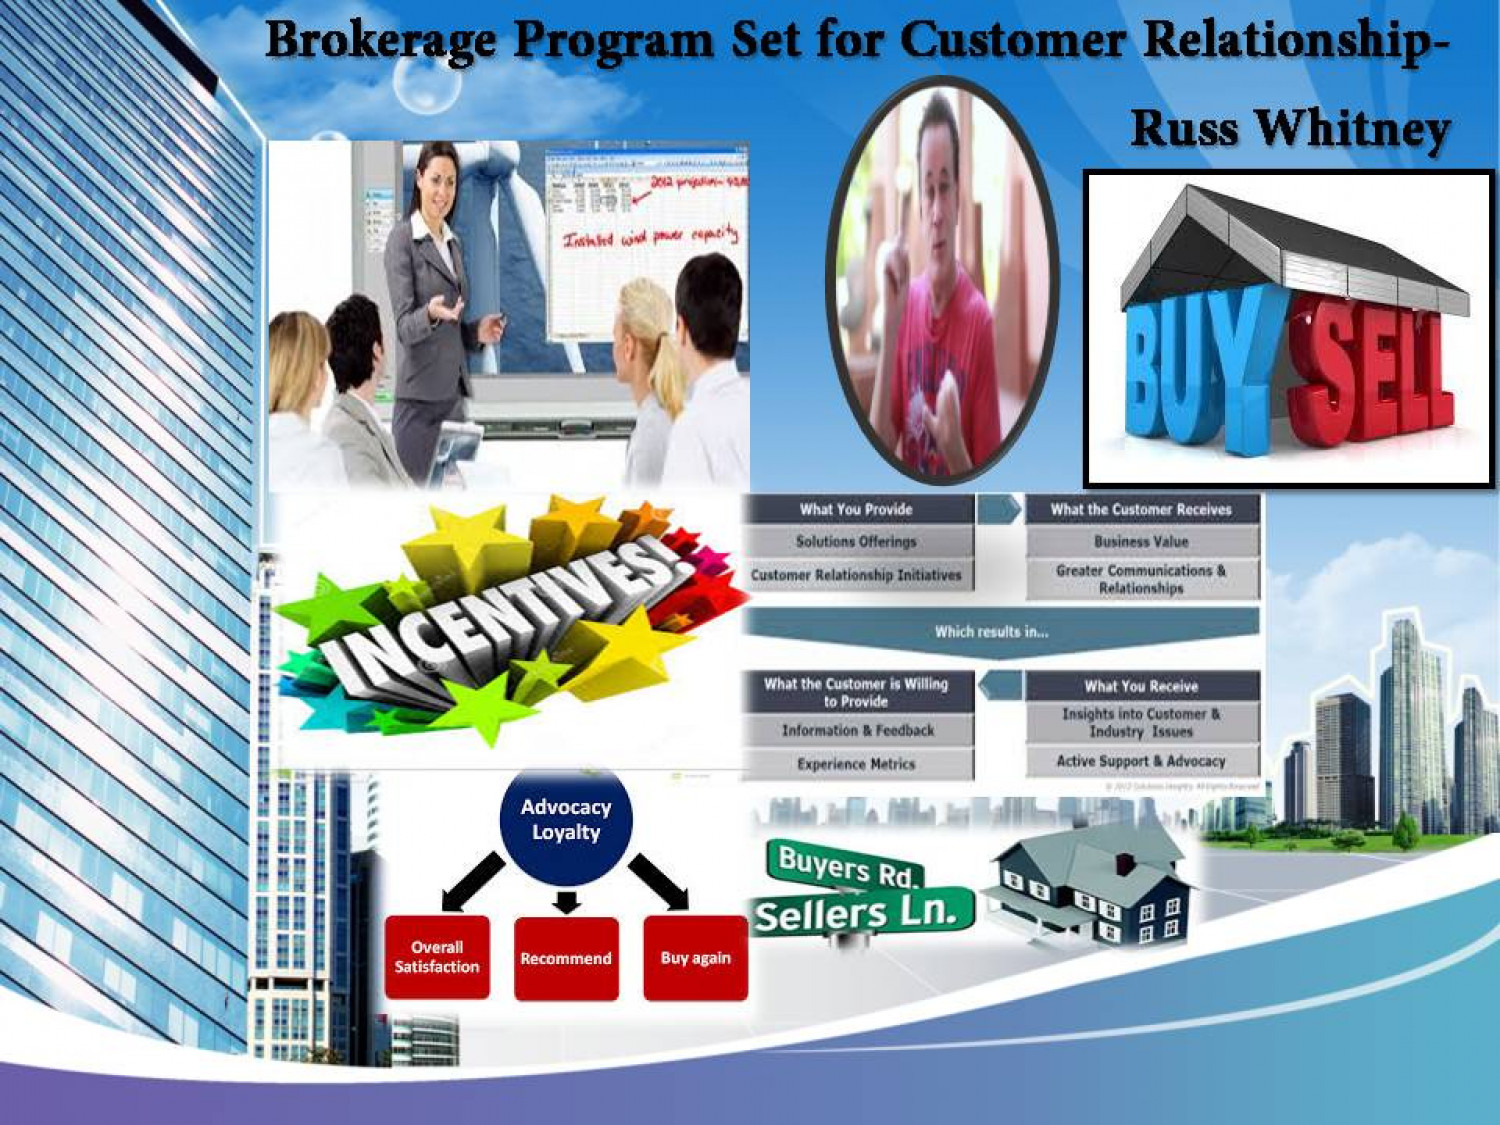 Brokerage Program Set for Customer Relationship Infographic